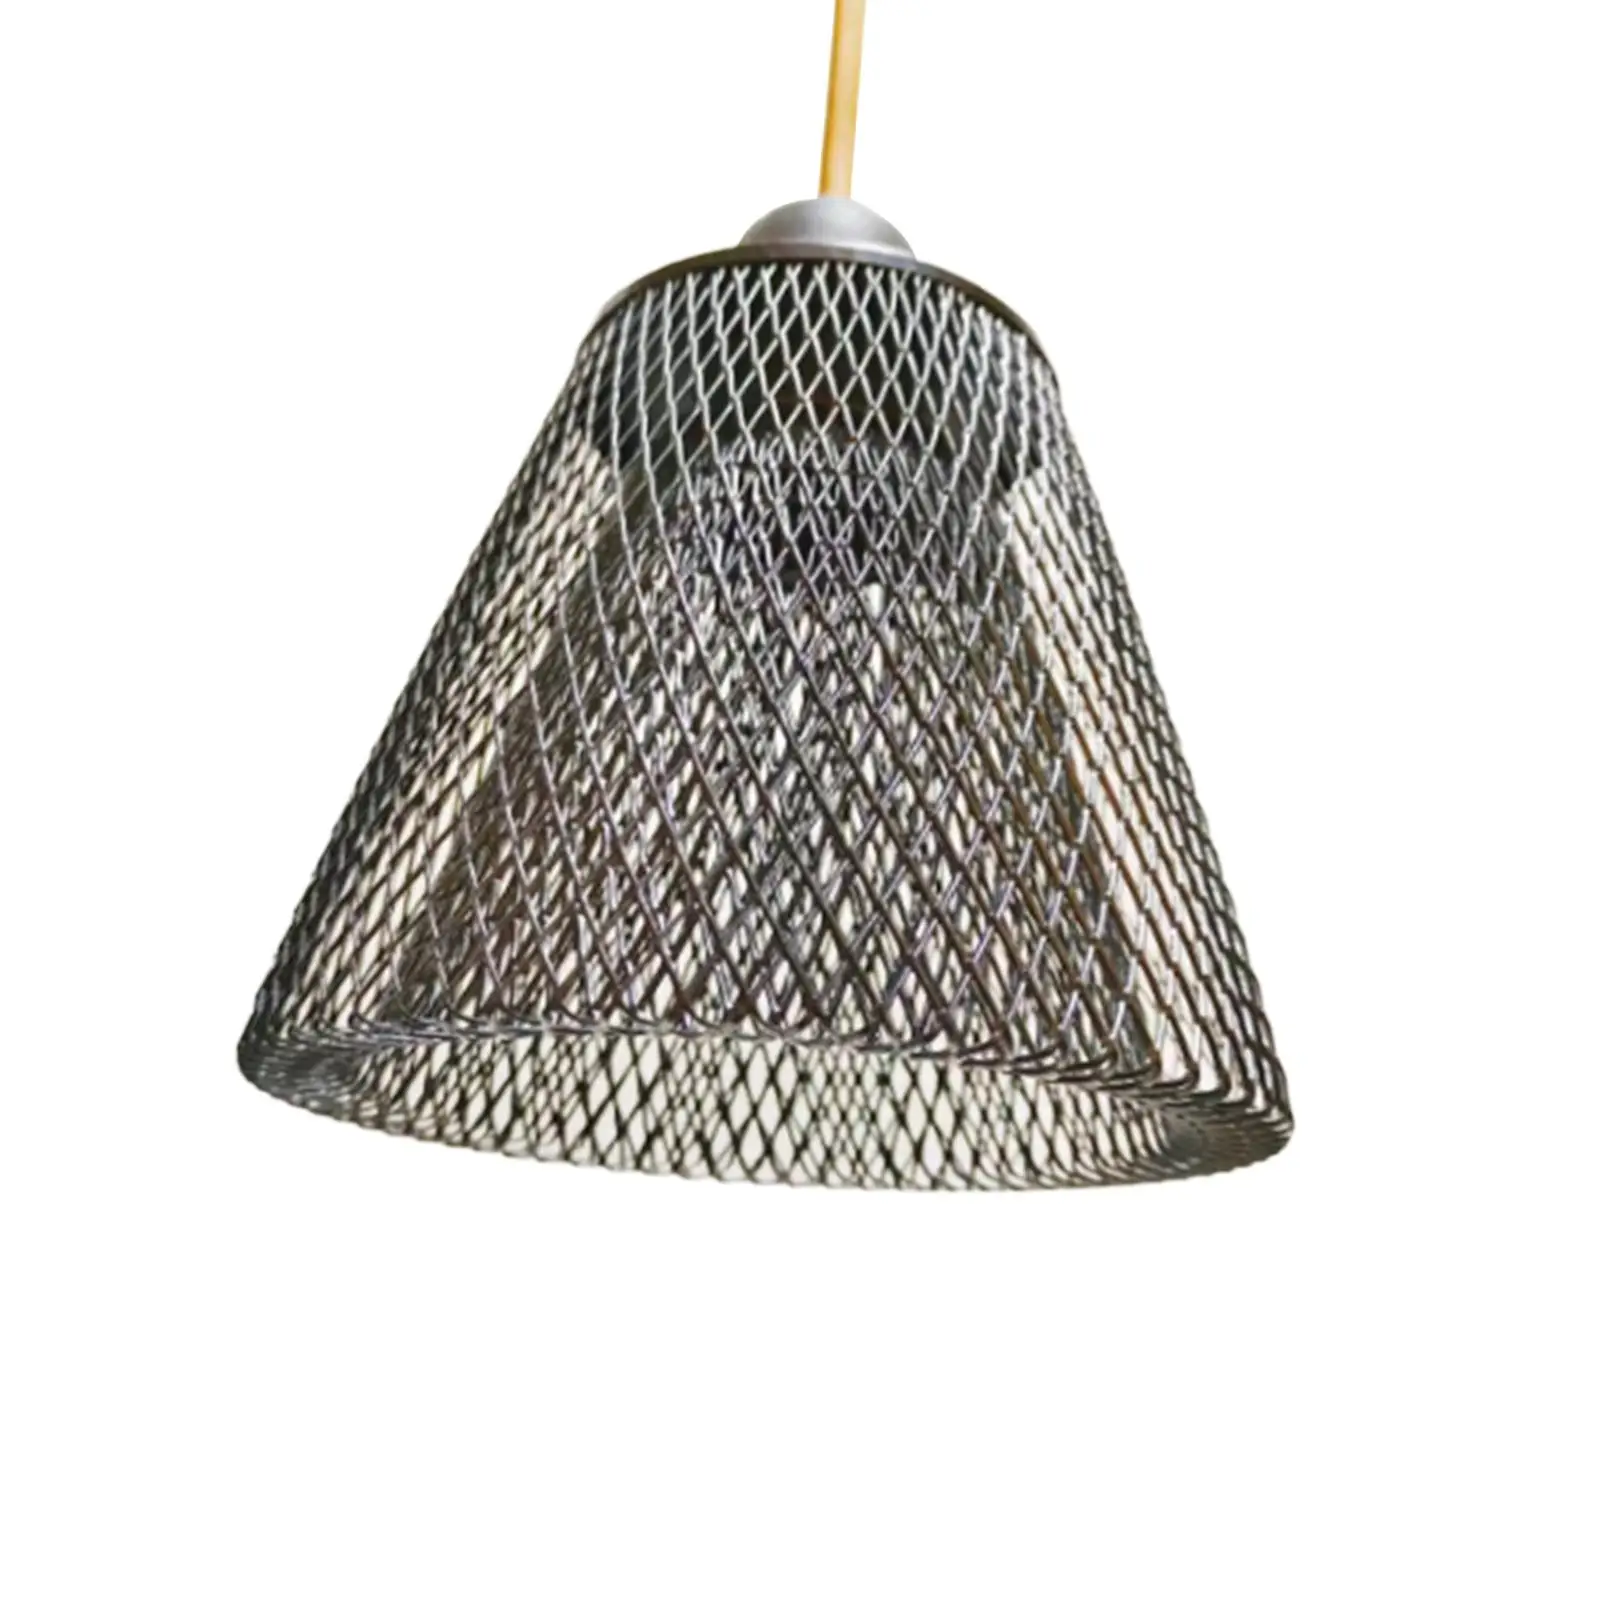 Iron Pendant Lamp Shade Light Fixture for Kitchen Island Hallway Teahouse